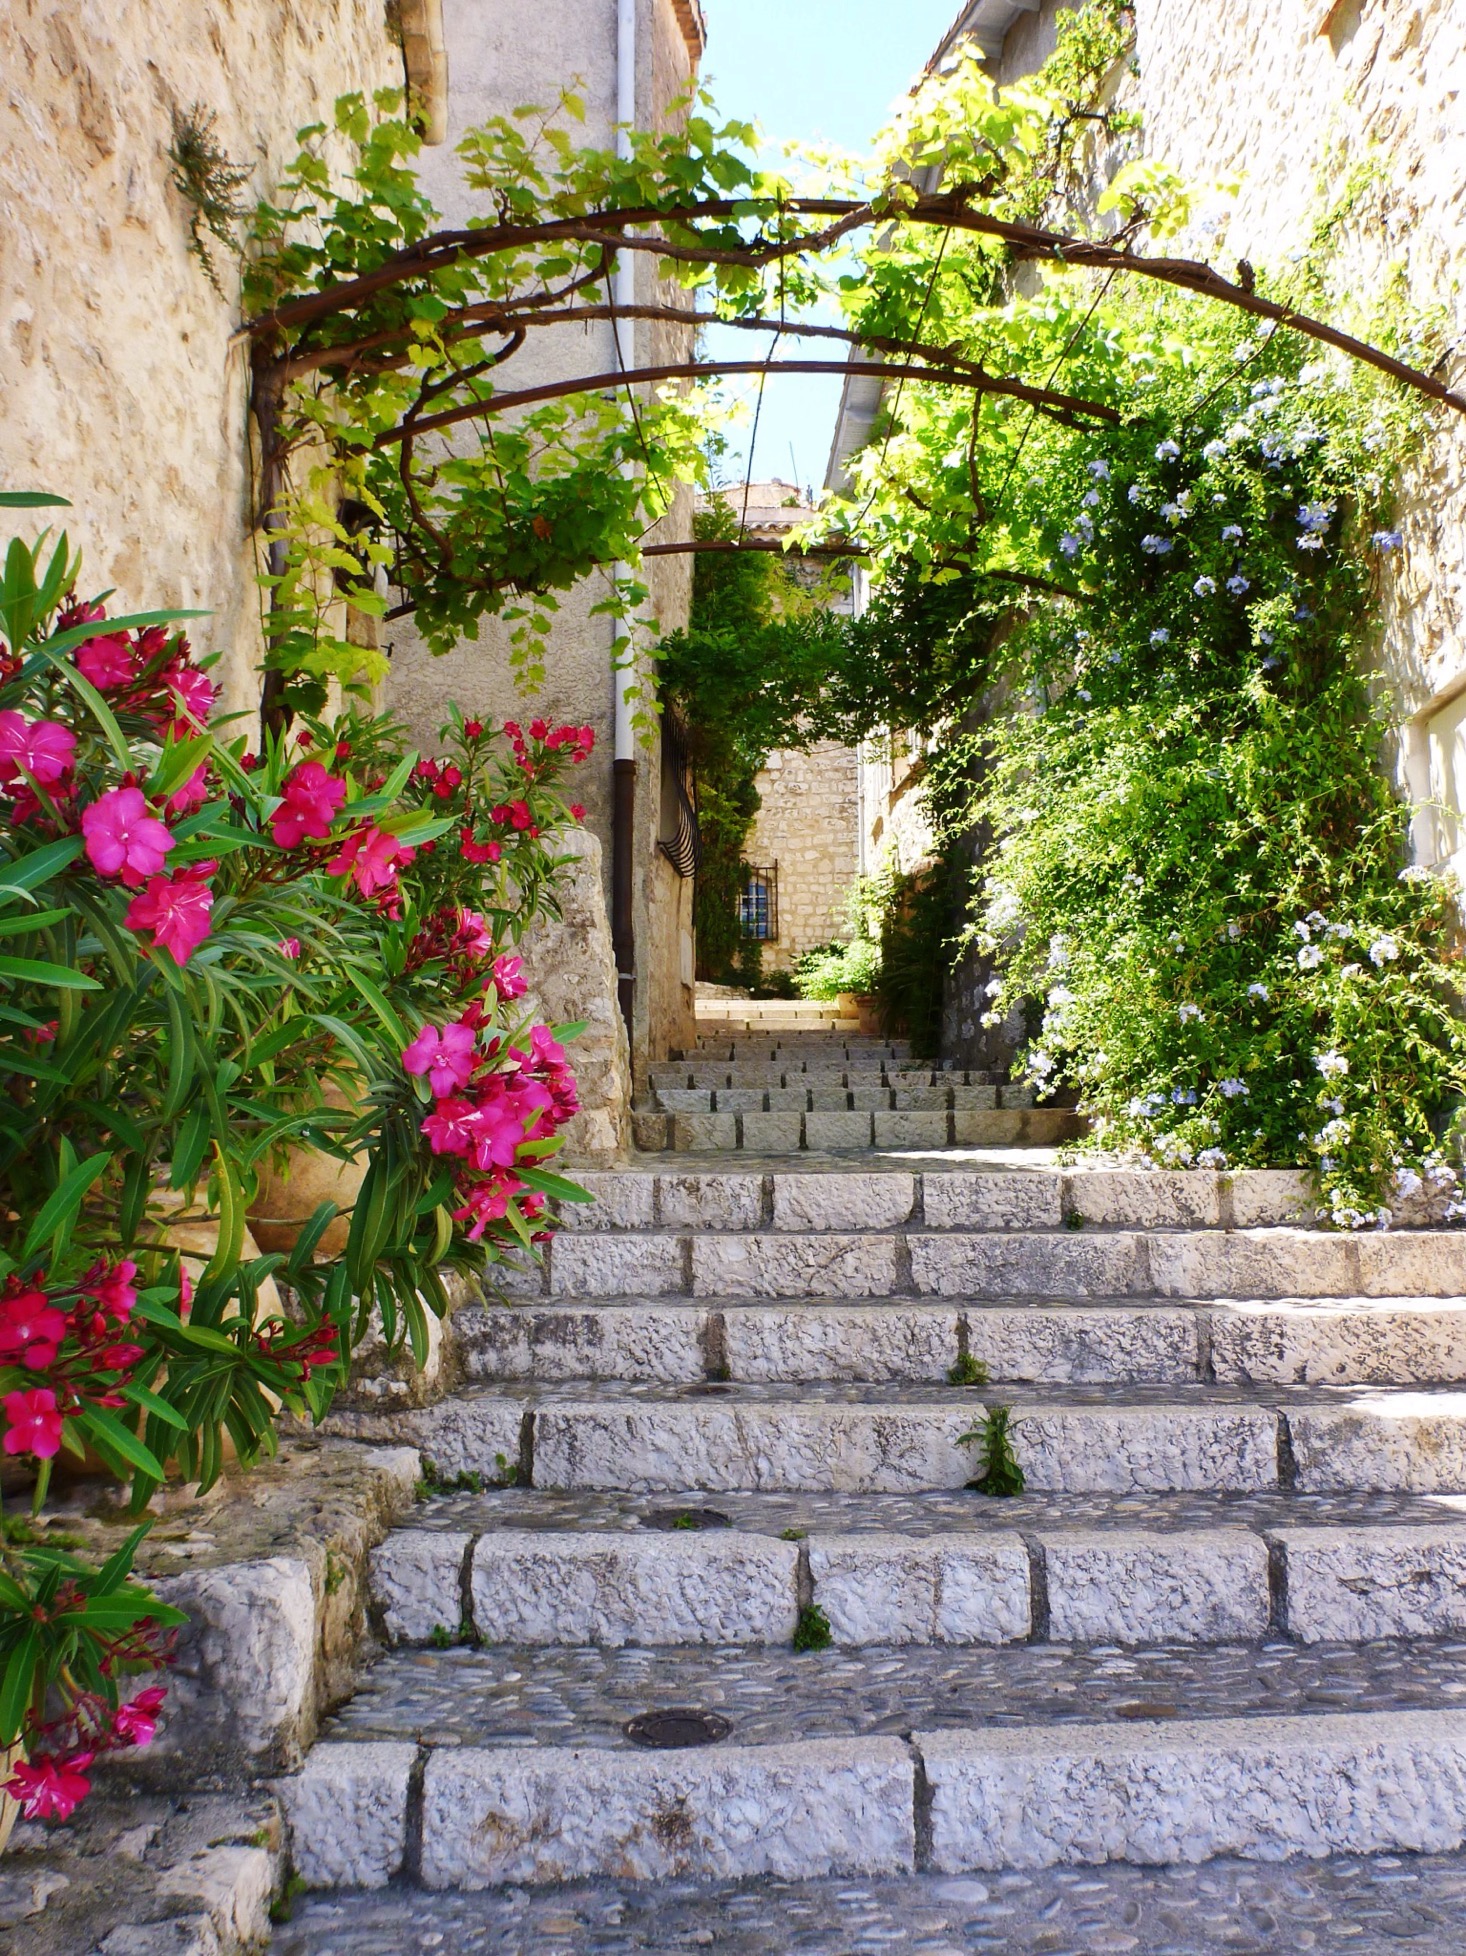 Cute Staircase - St. Paul de Vence - Côte d'Azur - South of France (French Riviera)